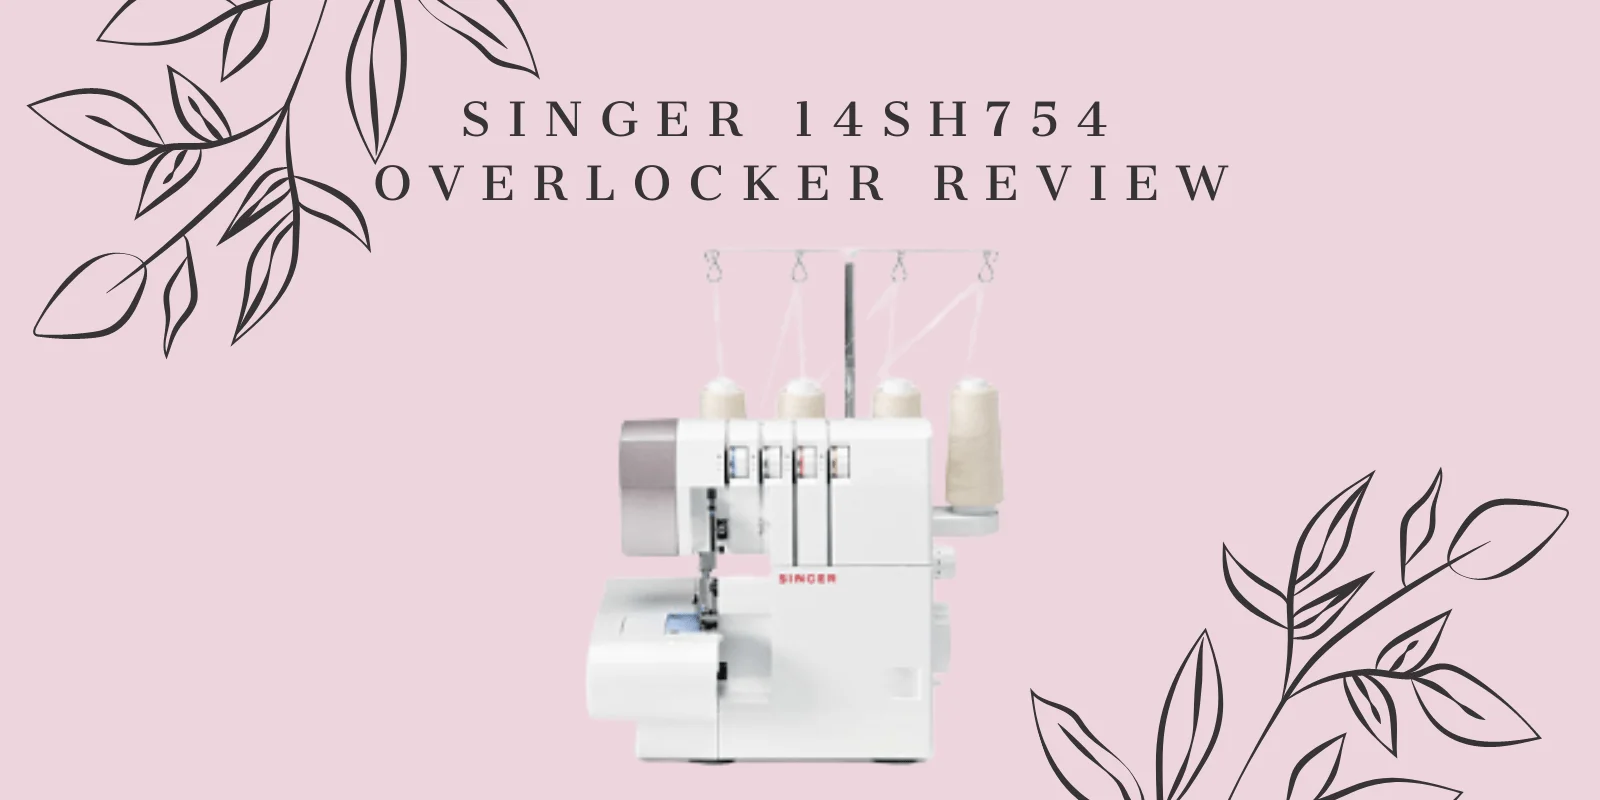 Singer Overlocker 14SH754 Review. A budget-priced overlocker